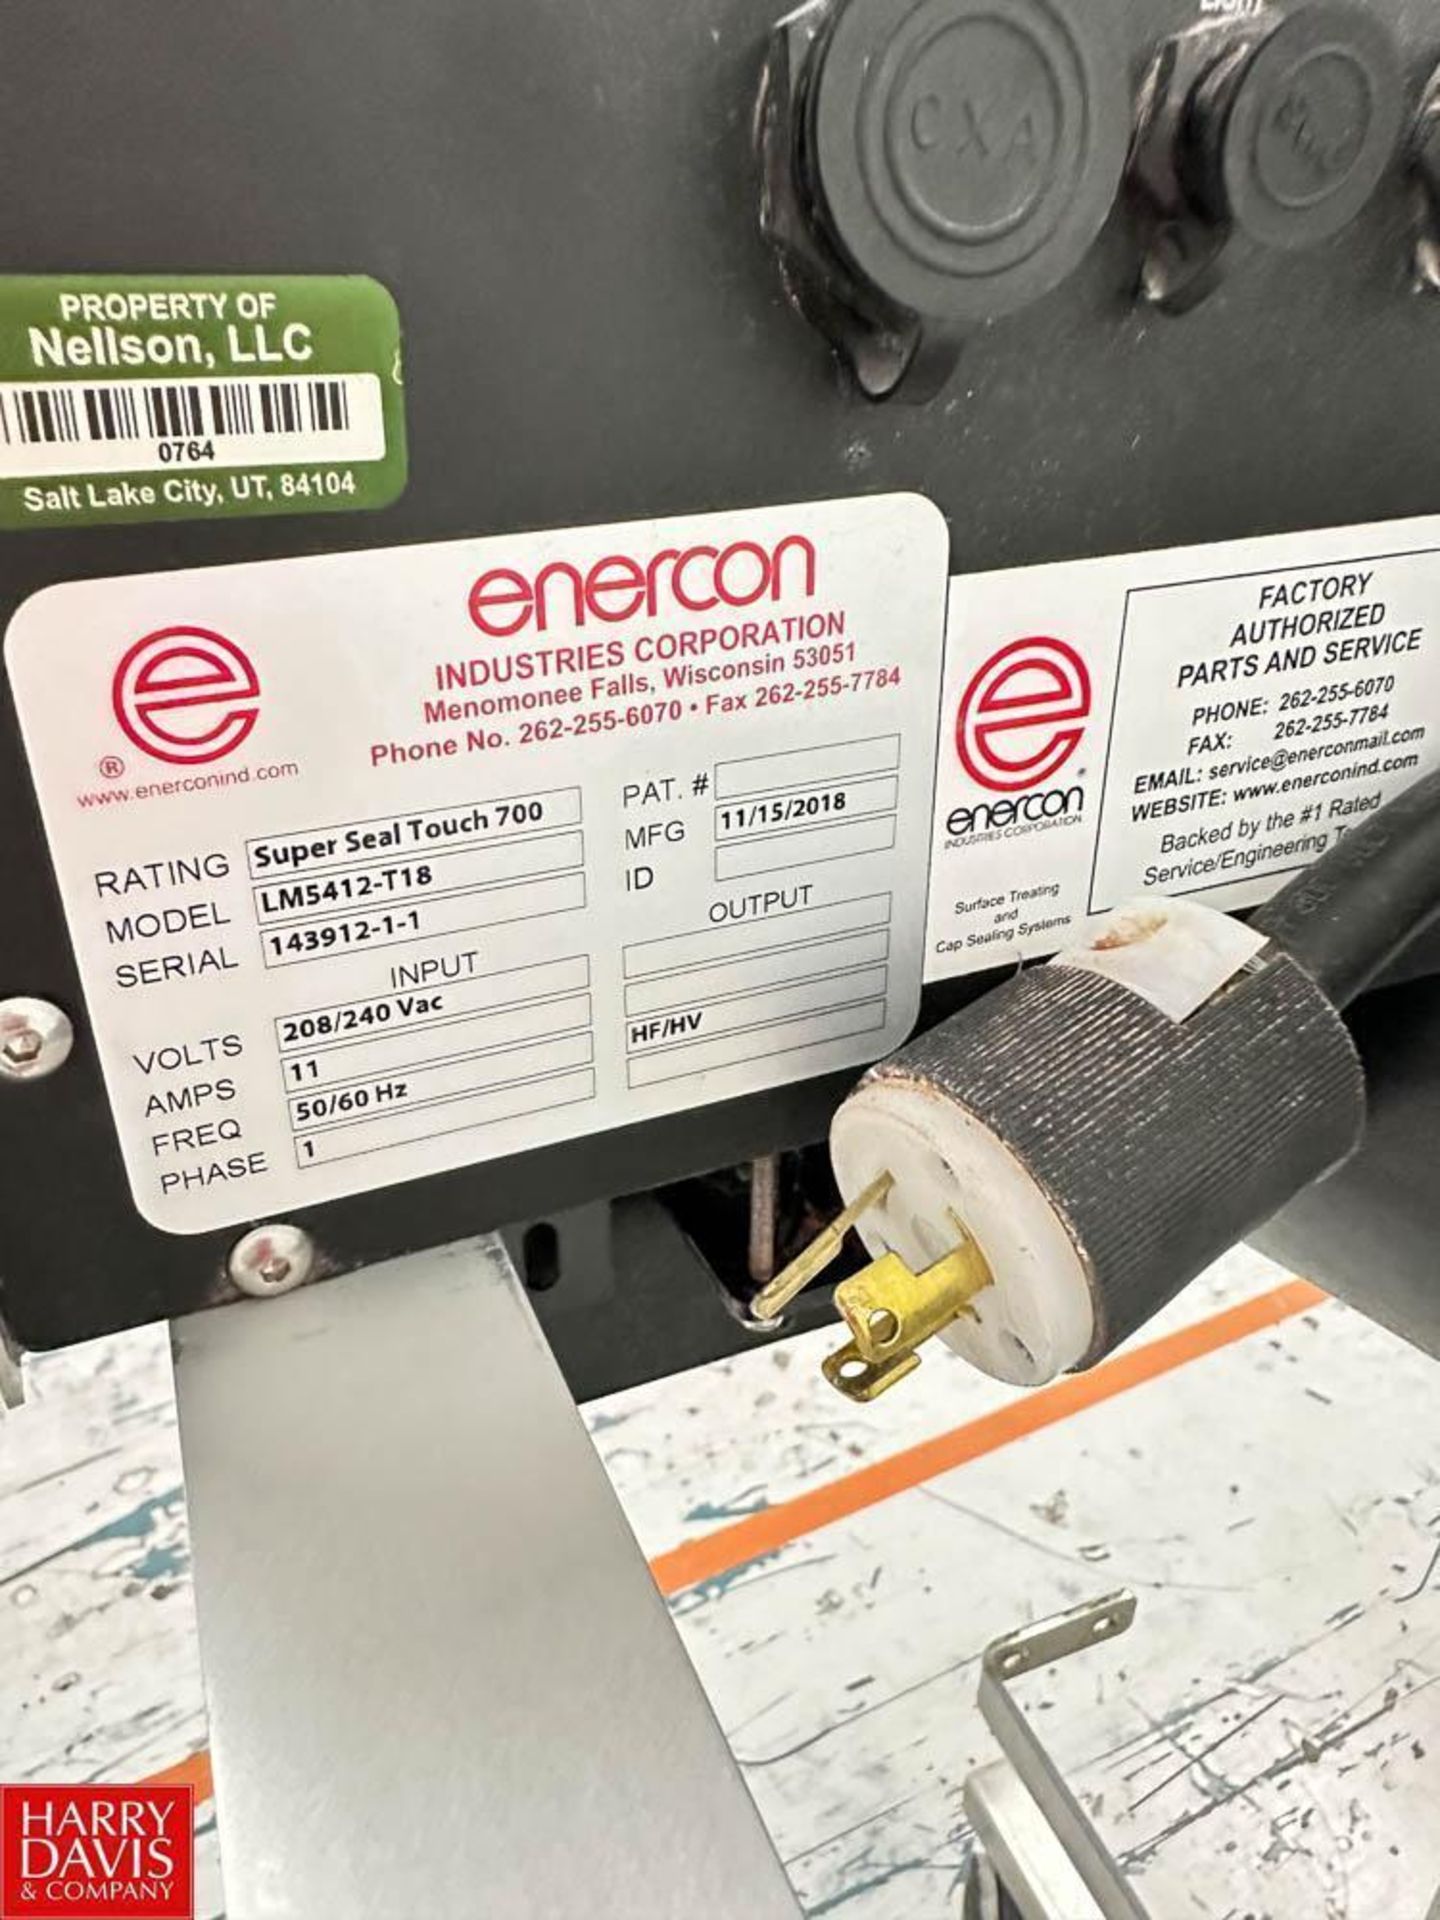 2018 Enercon Tamper Evident Sealer, Type: Super Seal Touch 700, Model: LMS412-718 - Image 3 of 4